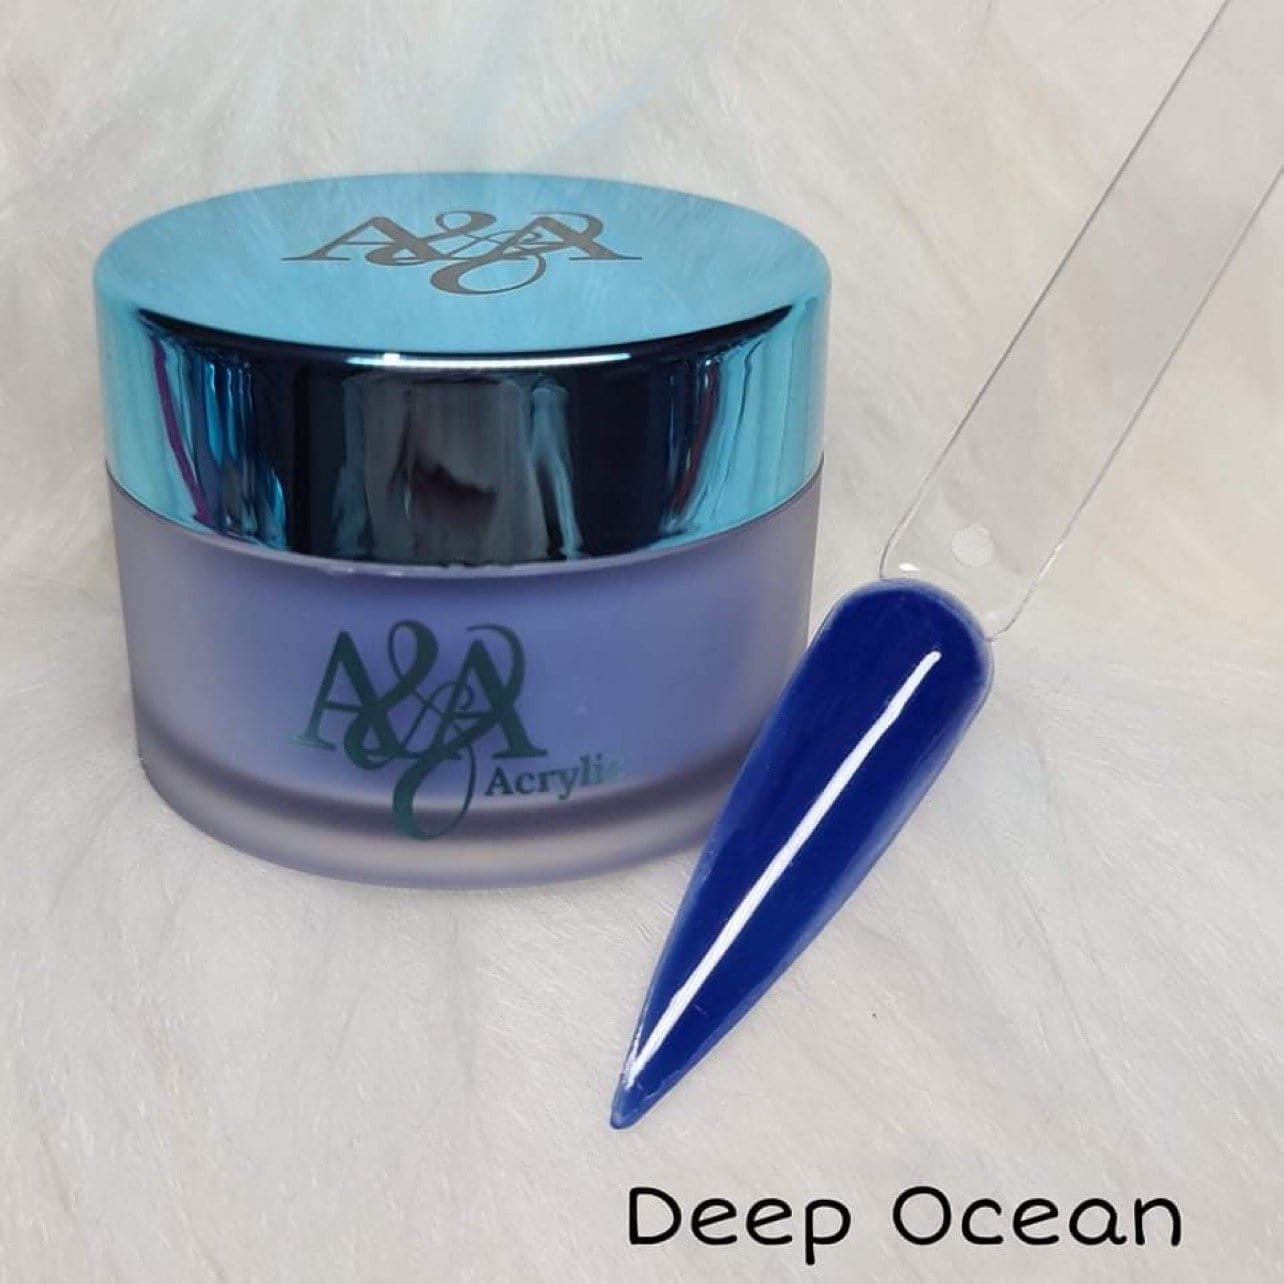 Deep Ocean - Colour acrylic